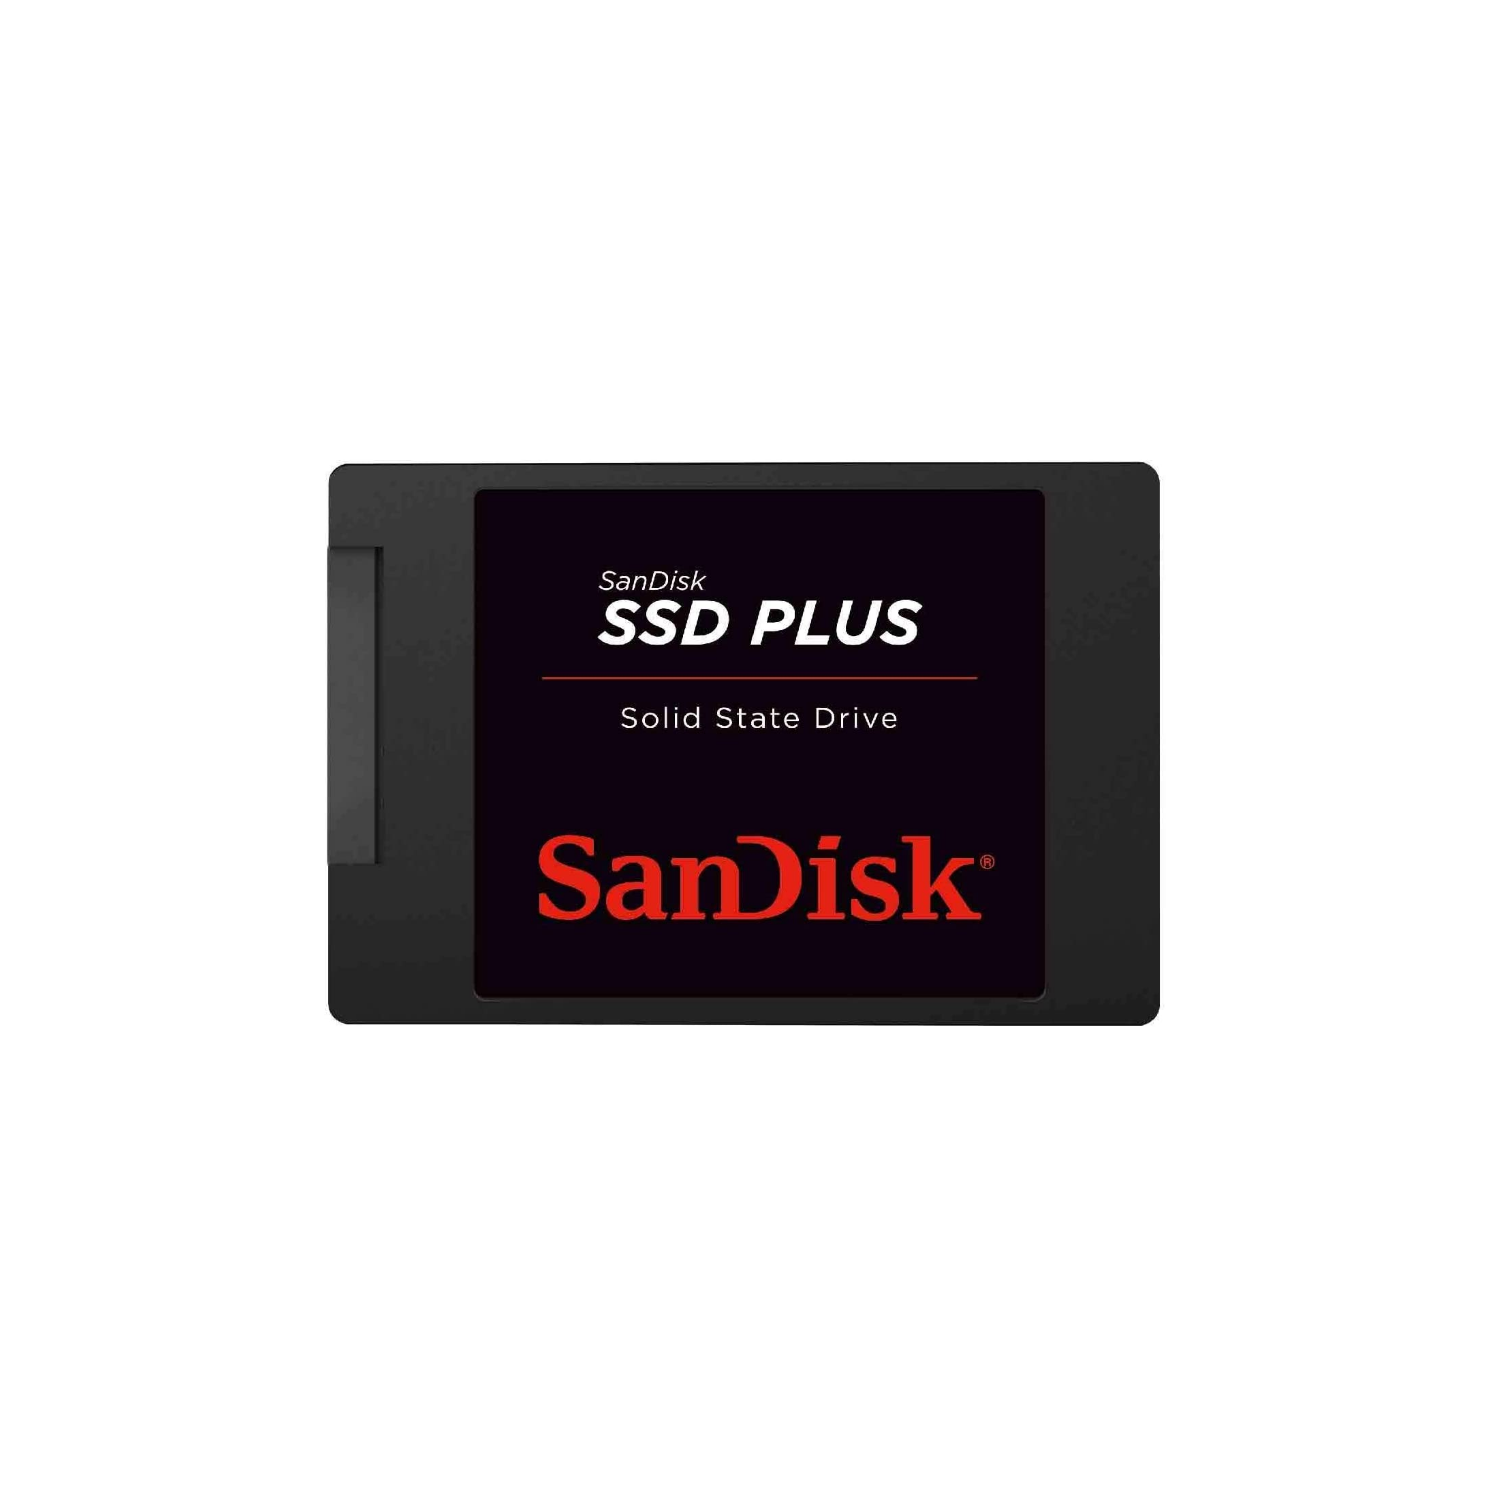 SanDisk SSD Plus 240GB Internal SSD - SATA III 6 Gb/s, 2.5"/7mm - SDSSDA-240G-G26